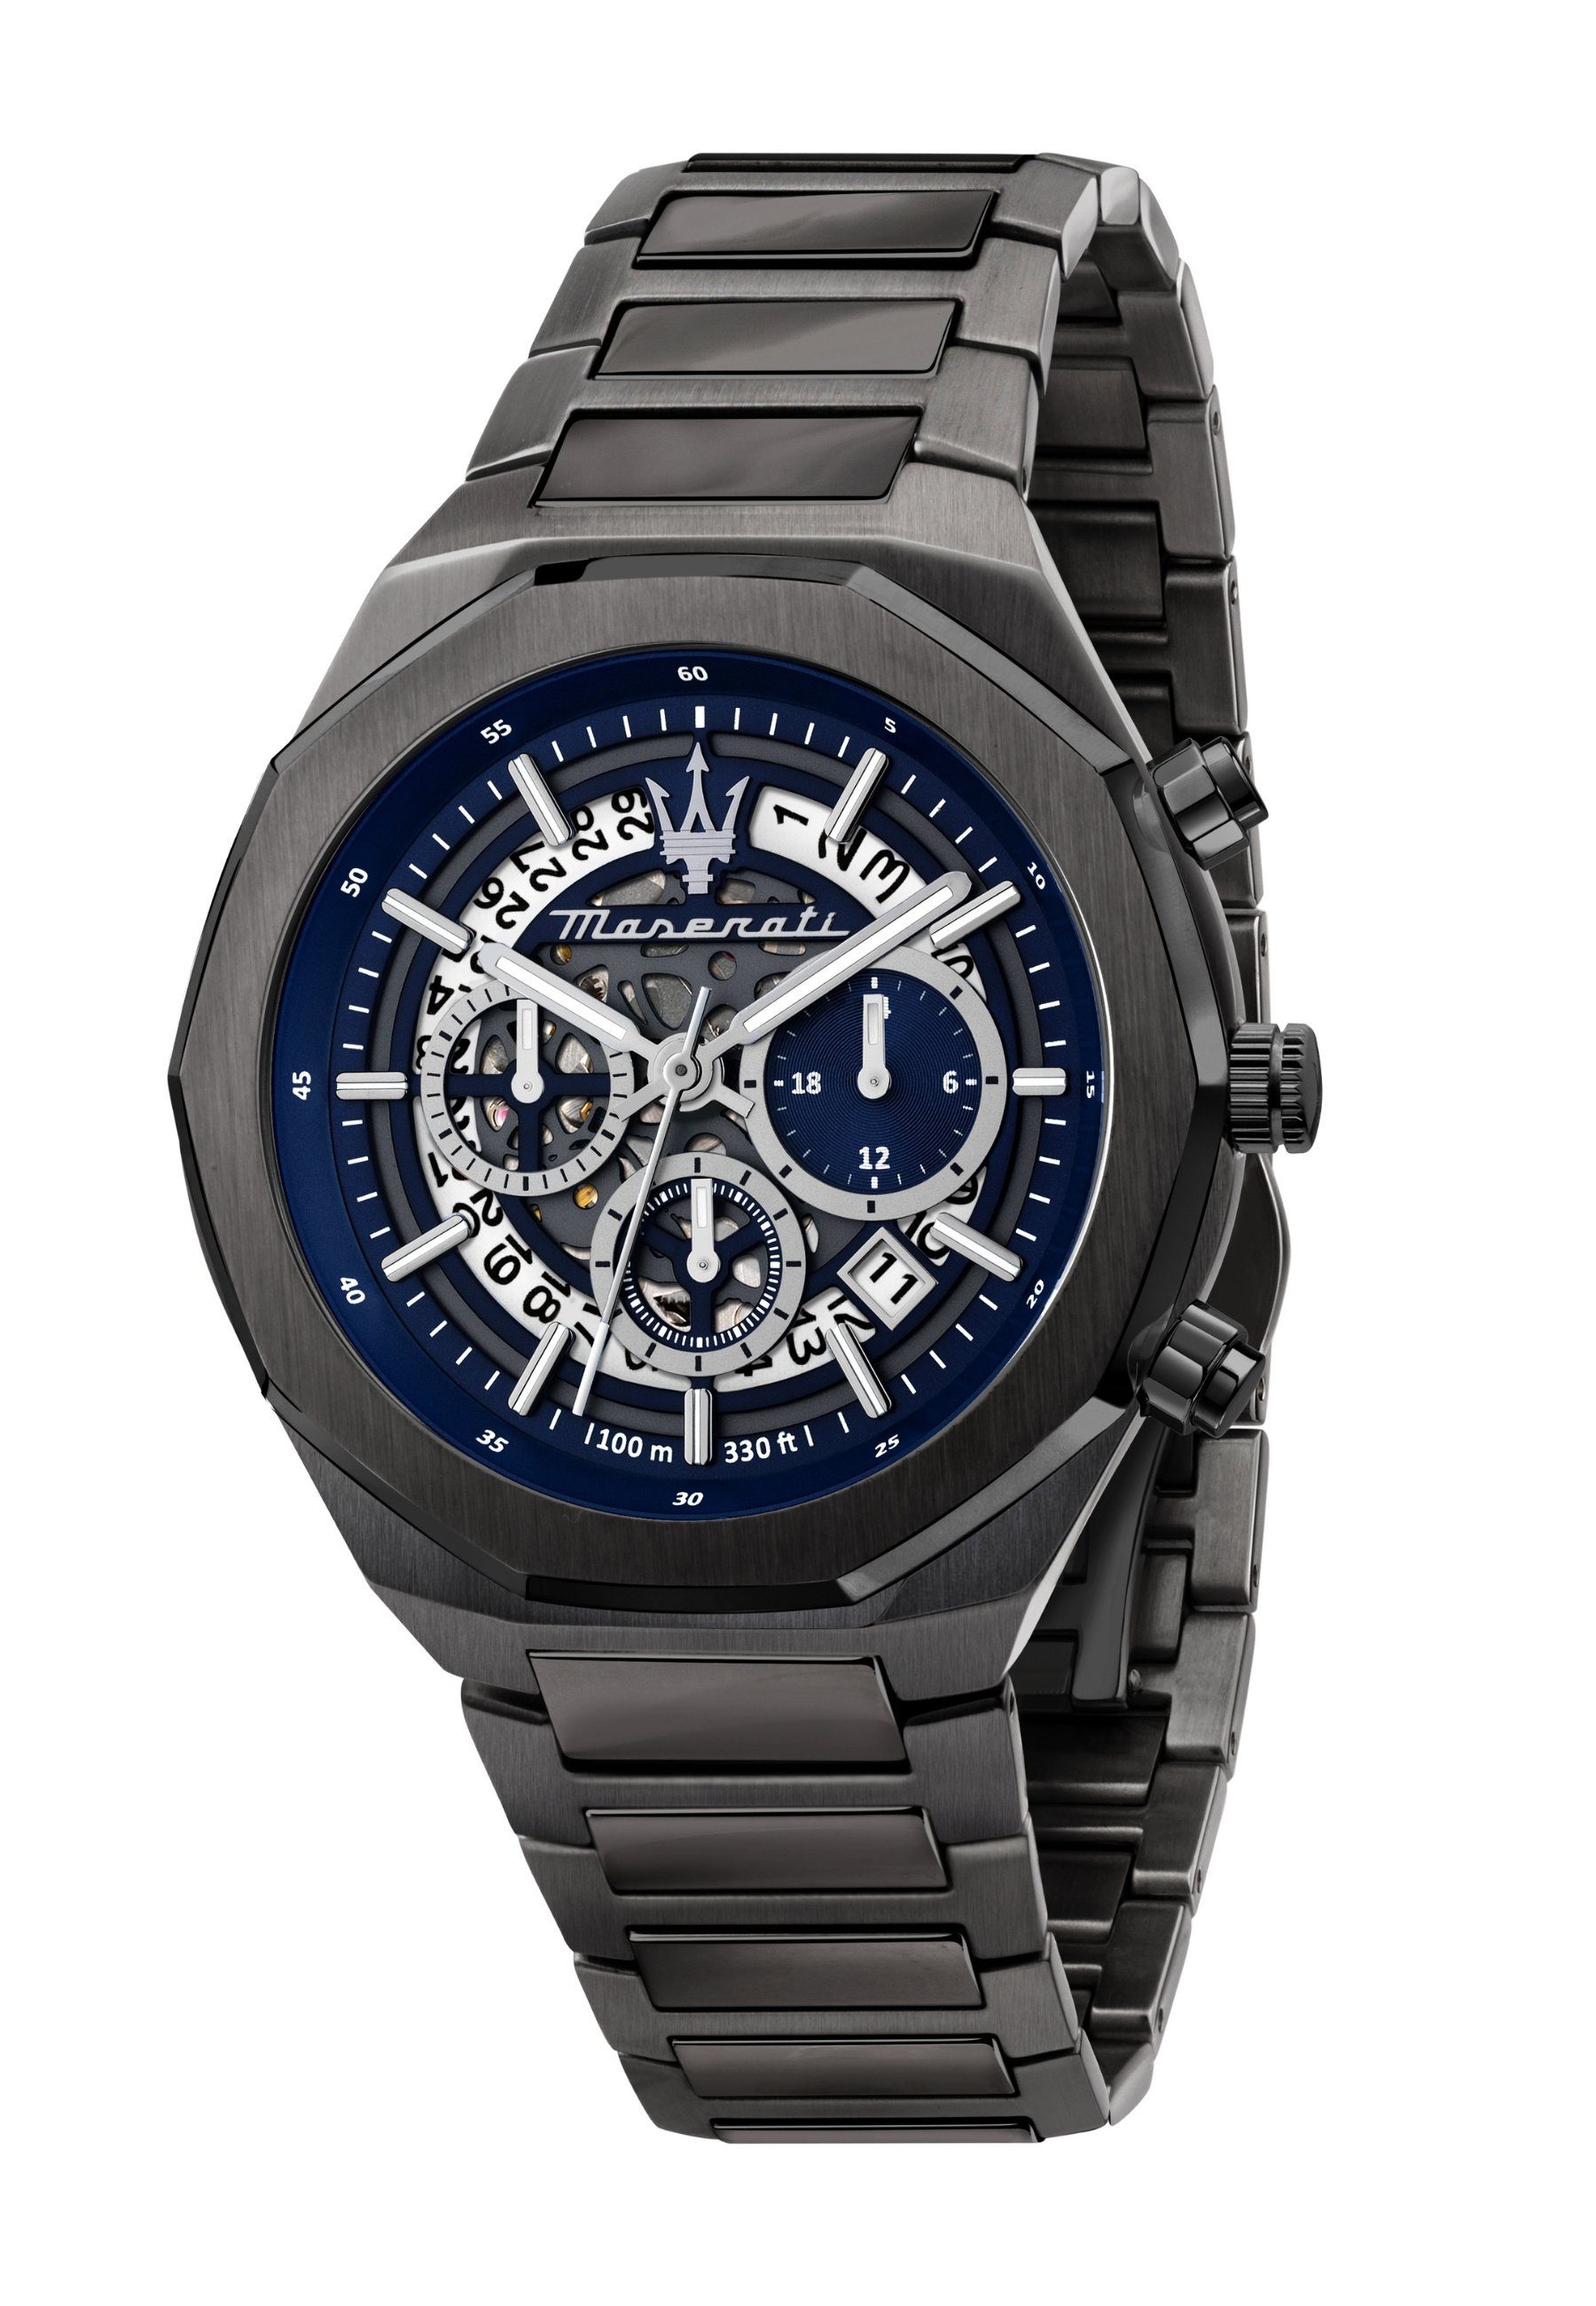 Maserati Time Chronograph Stile, Das aus Armband ist Design, modernem mit hochwertige Edelstahl angenehm besonders